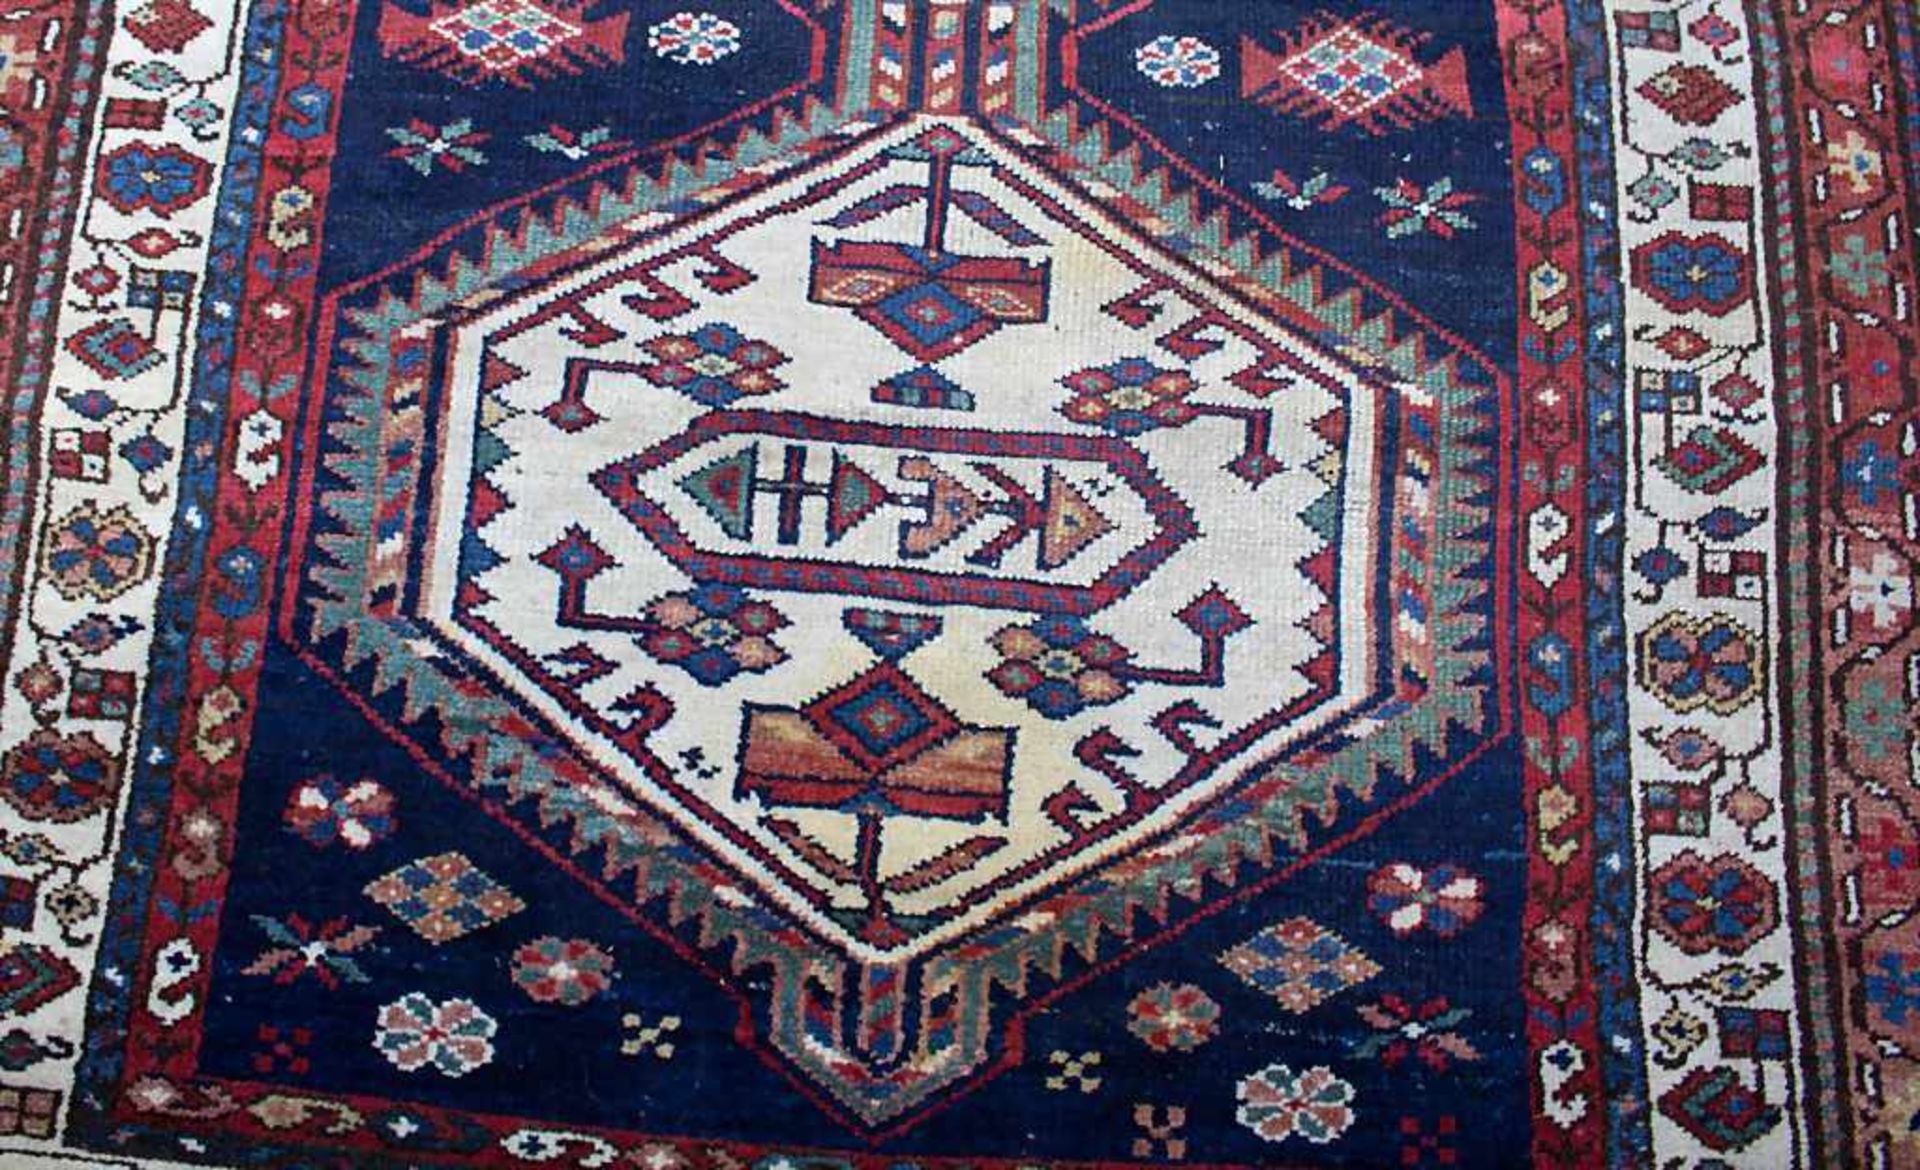 Orientteppich 'Hamadan' / An oriental carpet 'Hamadan' - Image 3 of 4